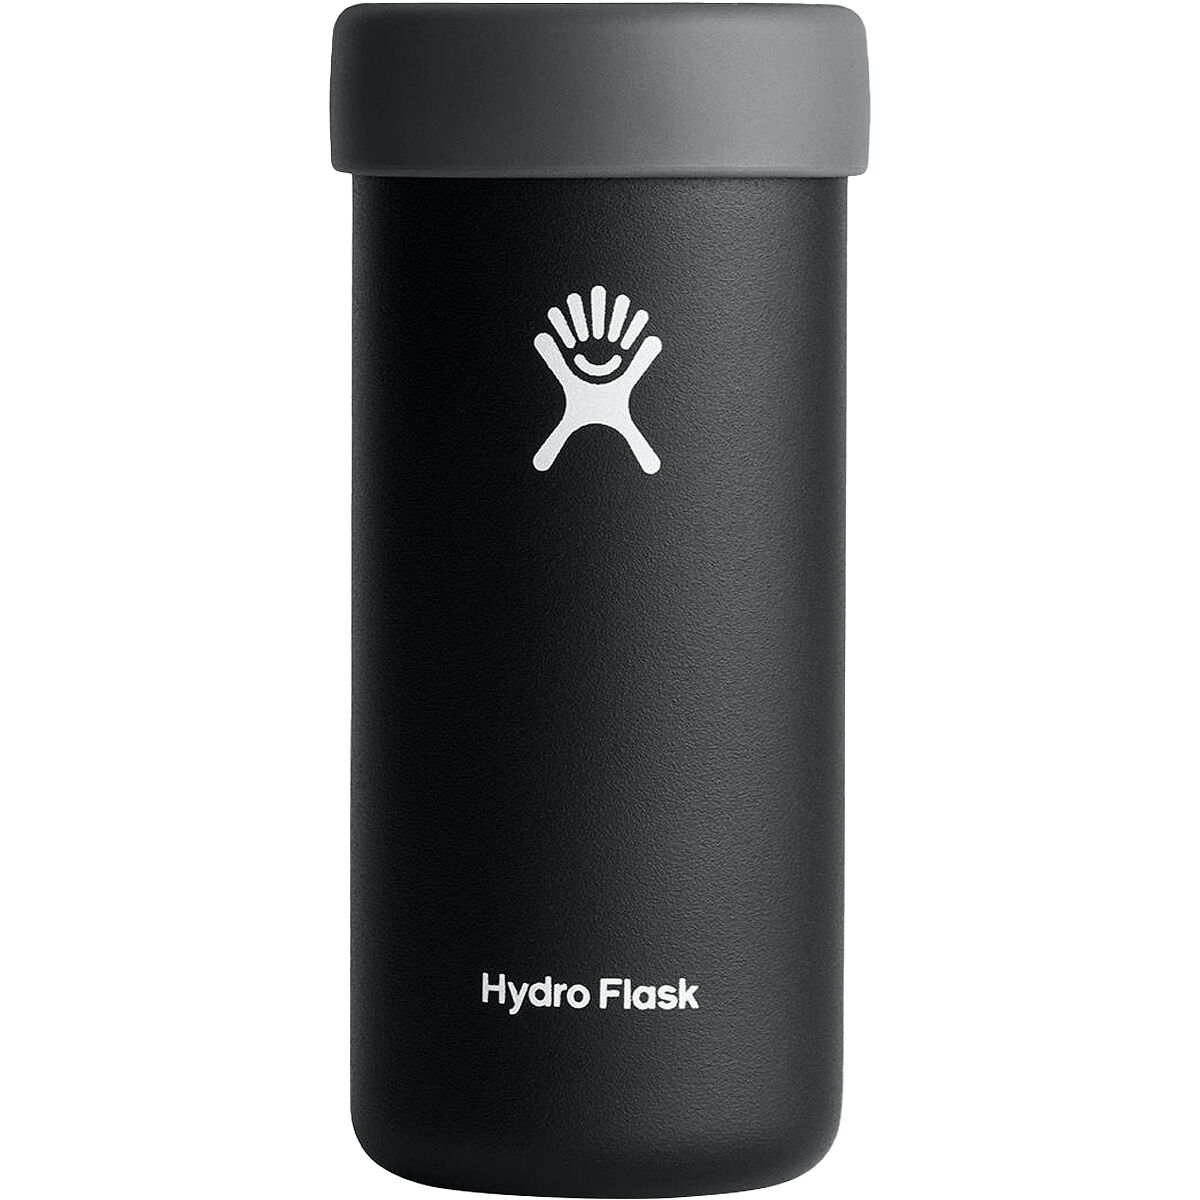 Hydro Flask 12 oz. Slim Cooler Cup - Worldwide Golf Shops